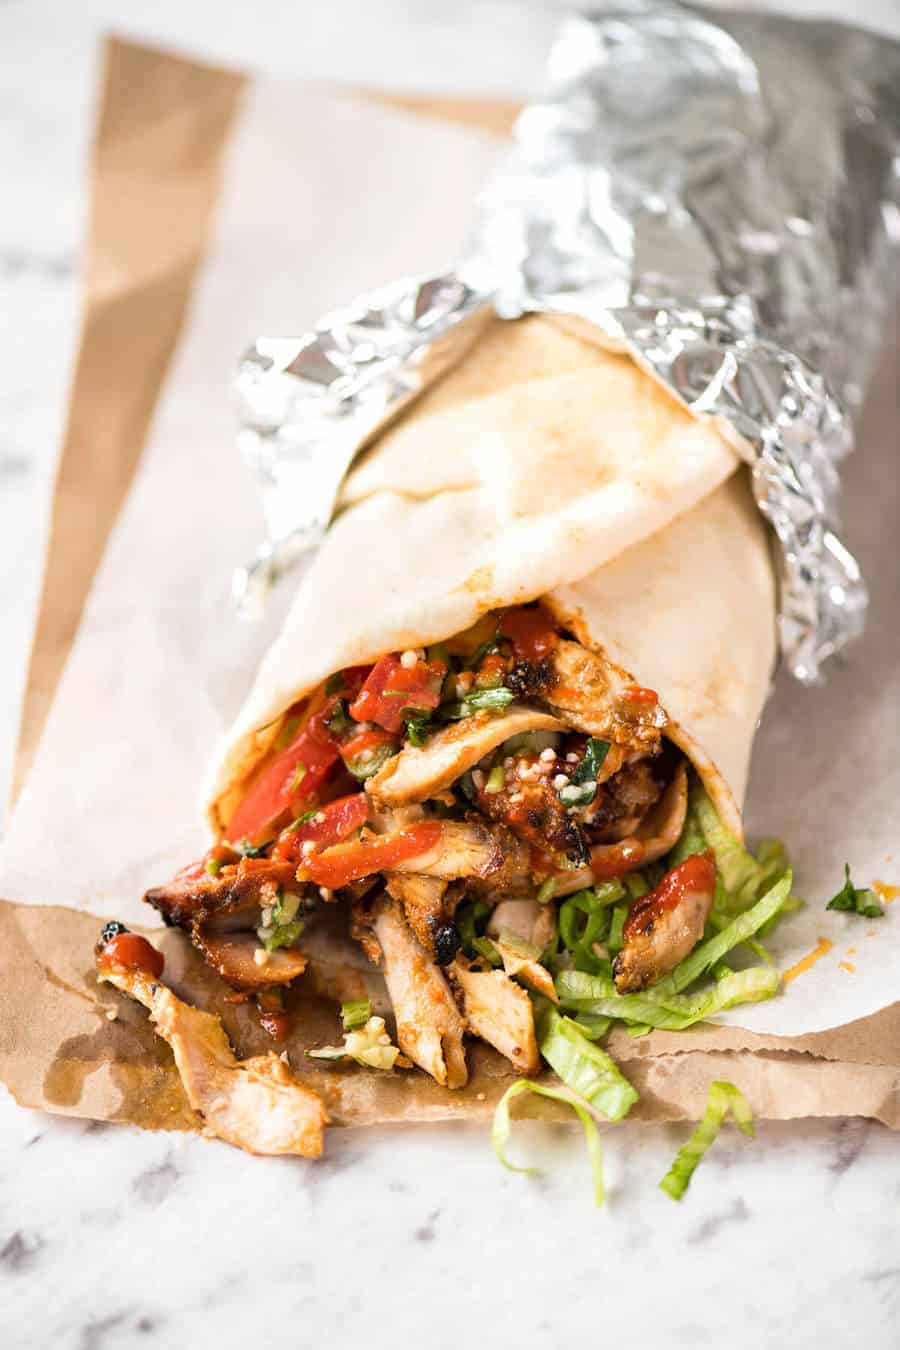 TurkOZ Kebabs | restaurant | Shop 13/100 Chittaway Rd, Chittaway Bay NSW 2261, Australia | 0243031198 OR +61 2 4303 1198